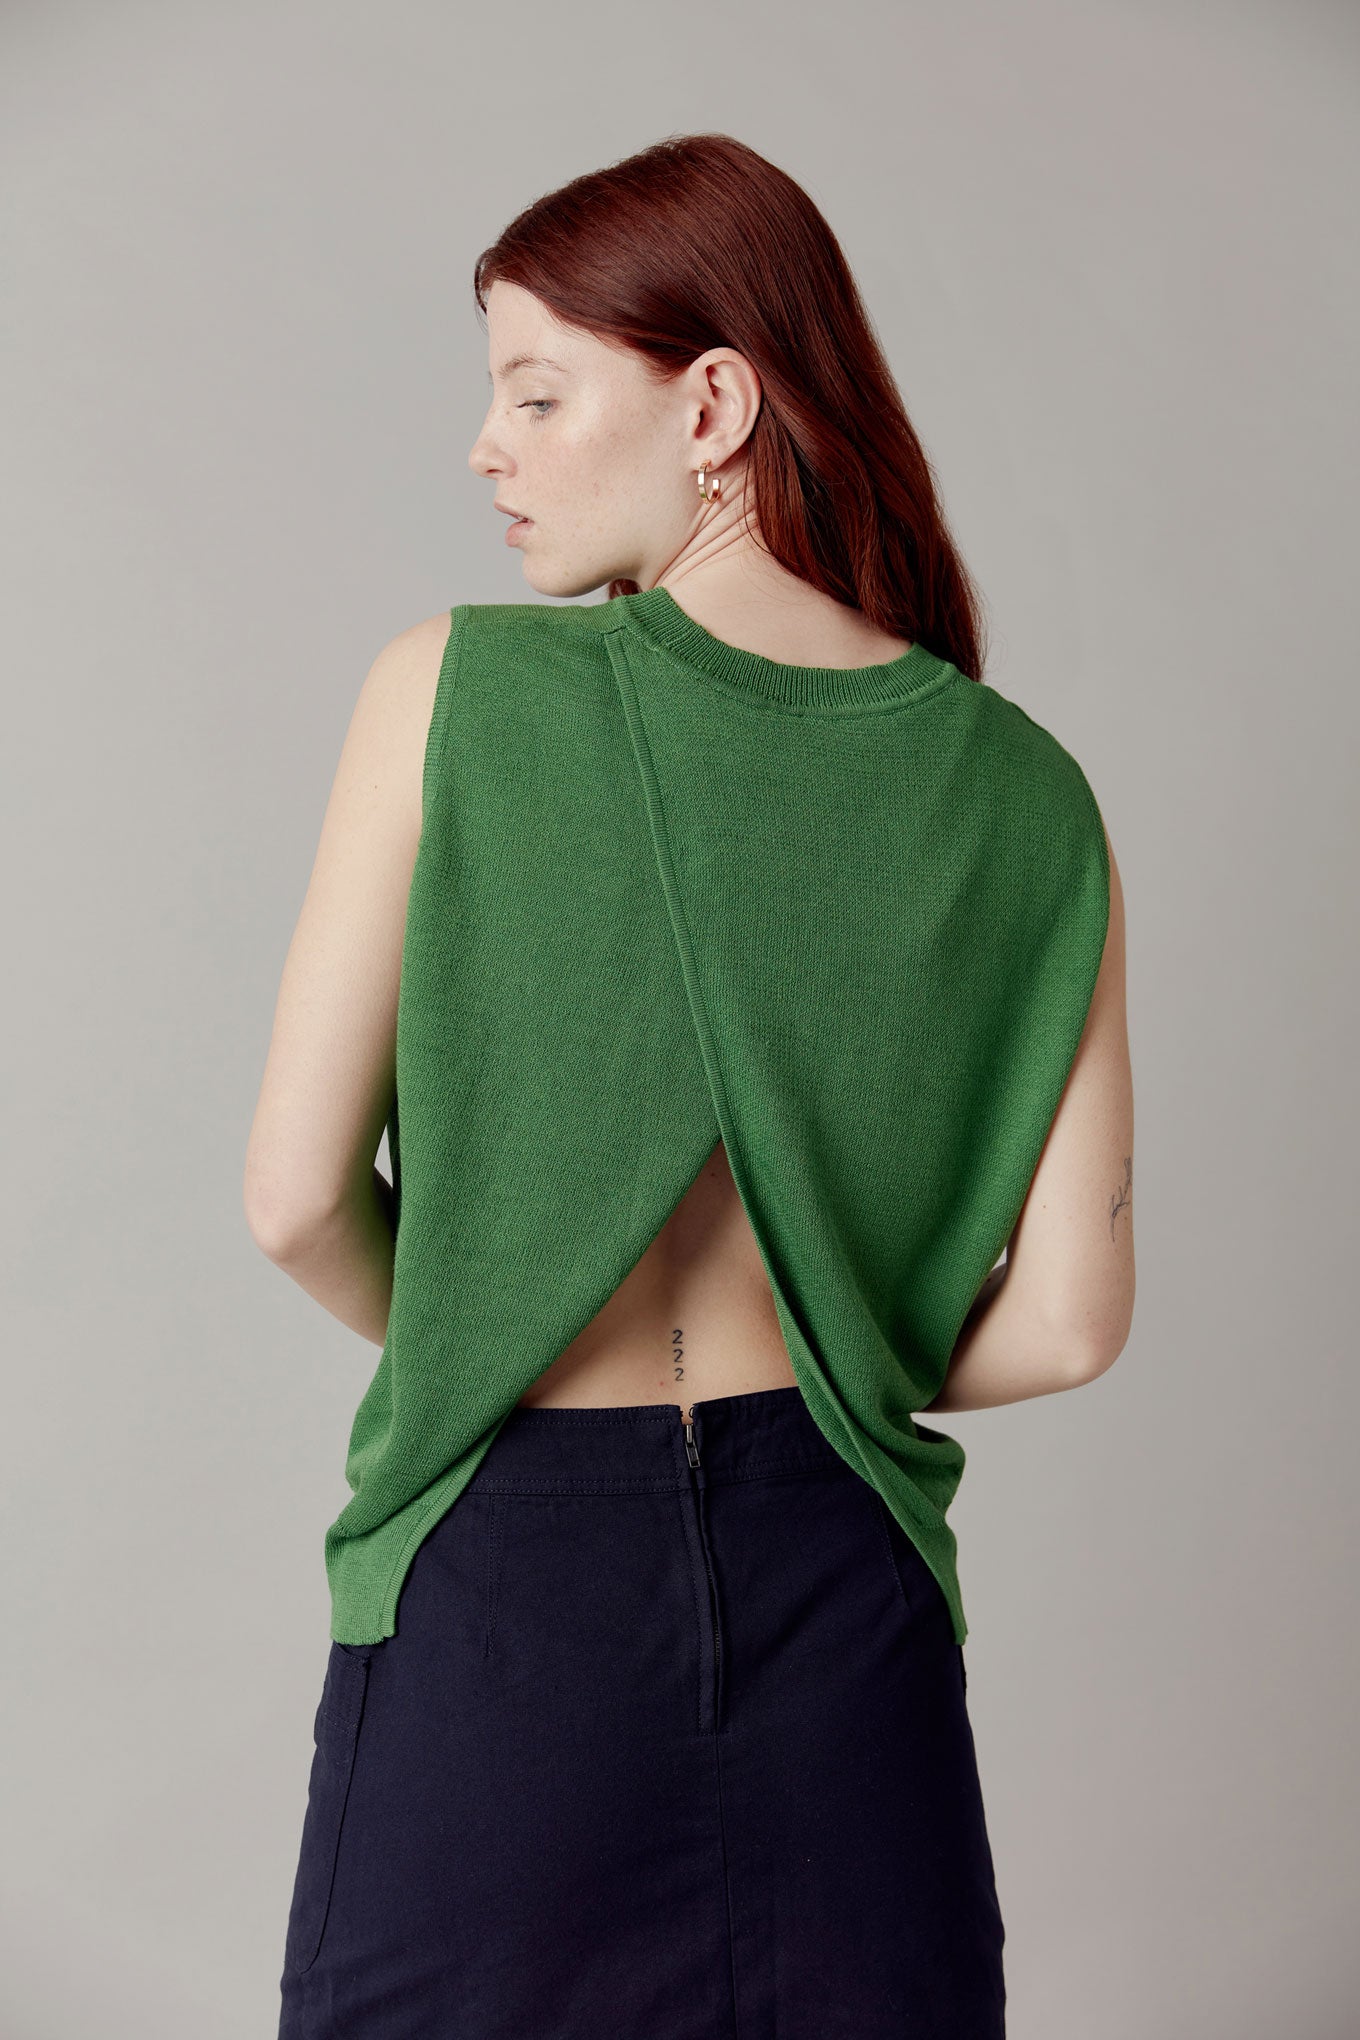 MILA Organic Cotton Vest - Summer Green, SIZE 1 / UK 8 / EUR 36